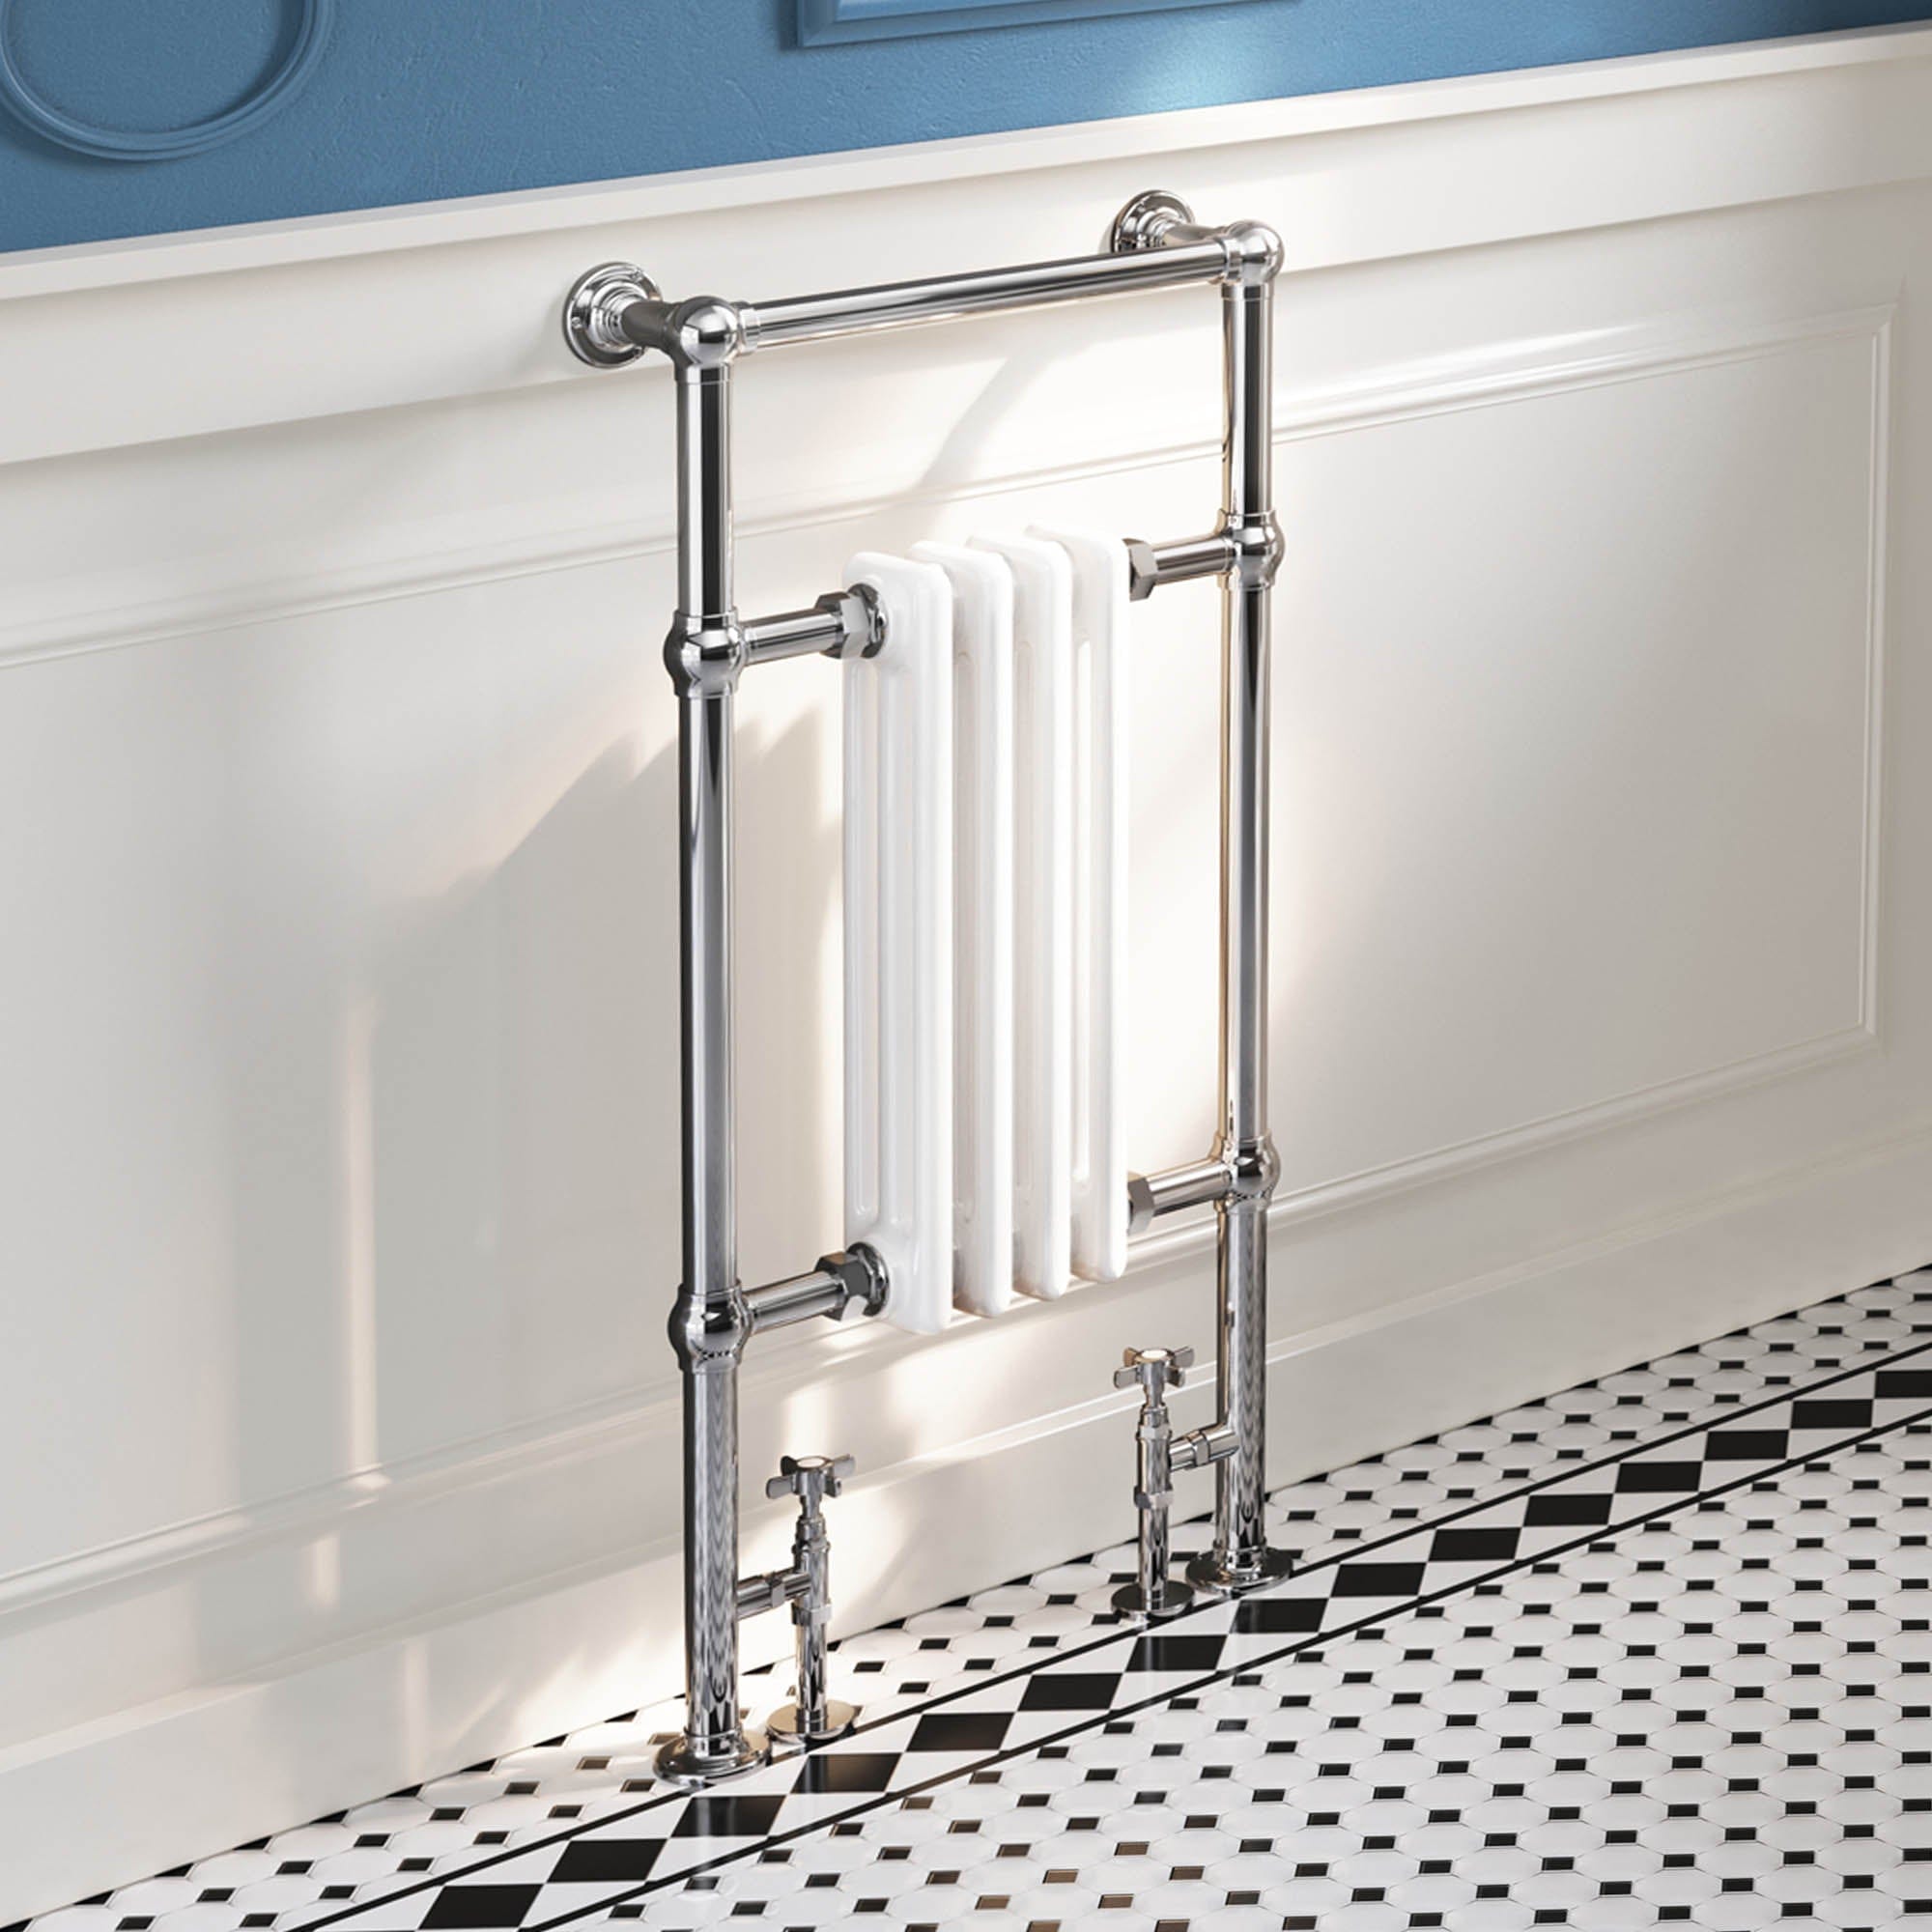 Bathroom4less Heating,Heated Towel Rails,Column Radiators Vintage Vertical Heated Towel Radiator - 4 Column - Chrome&White